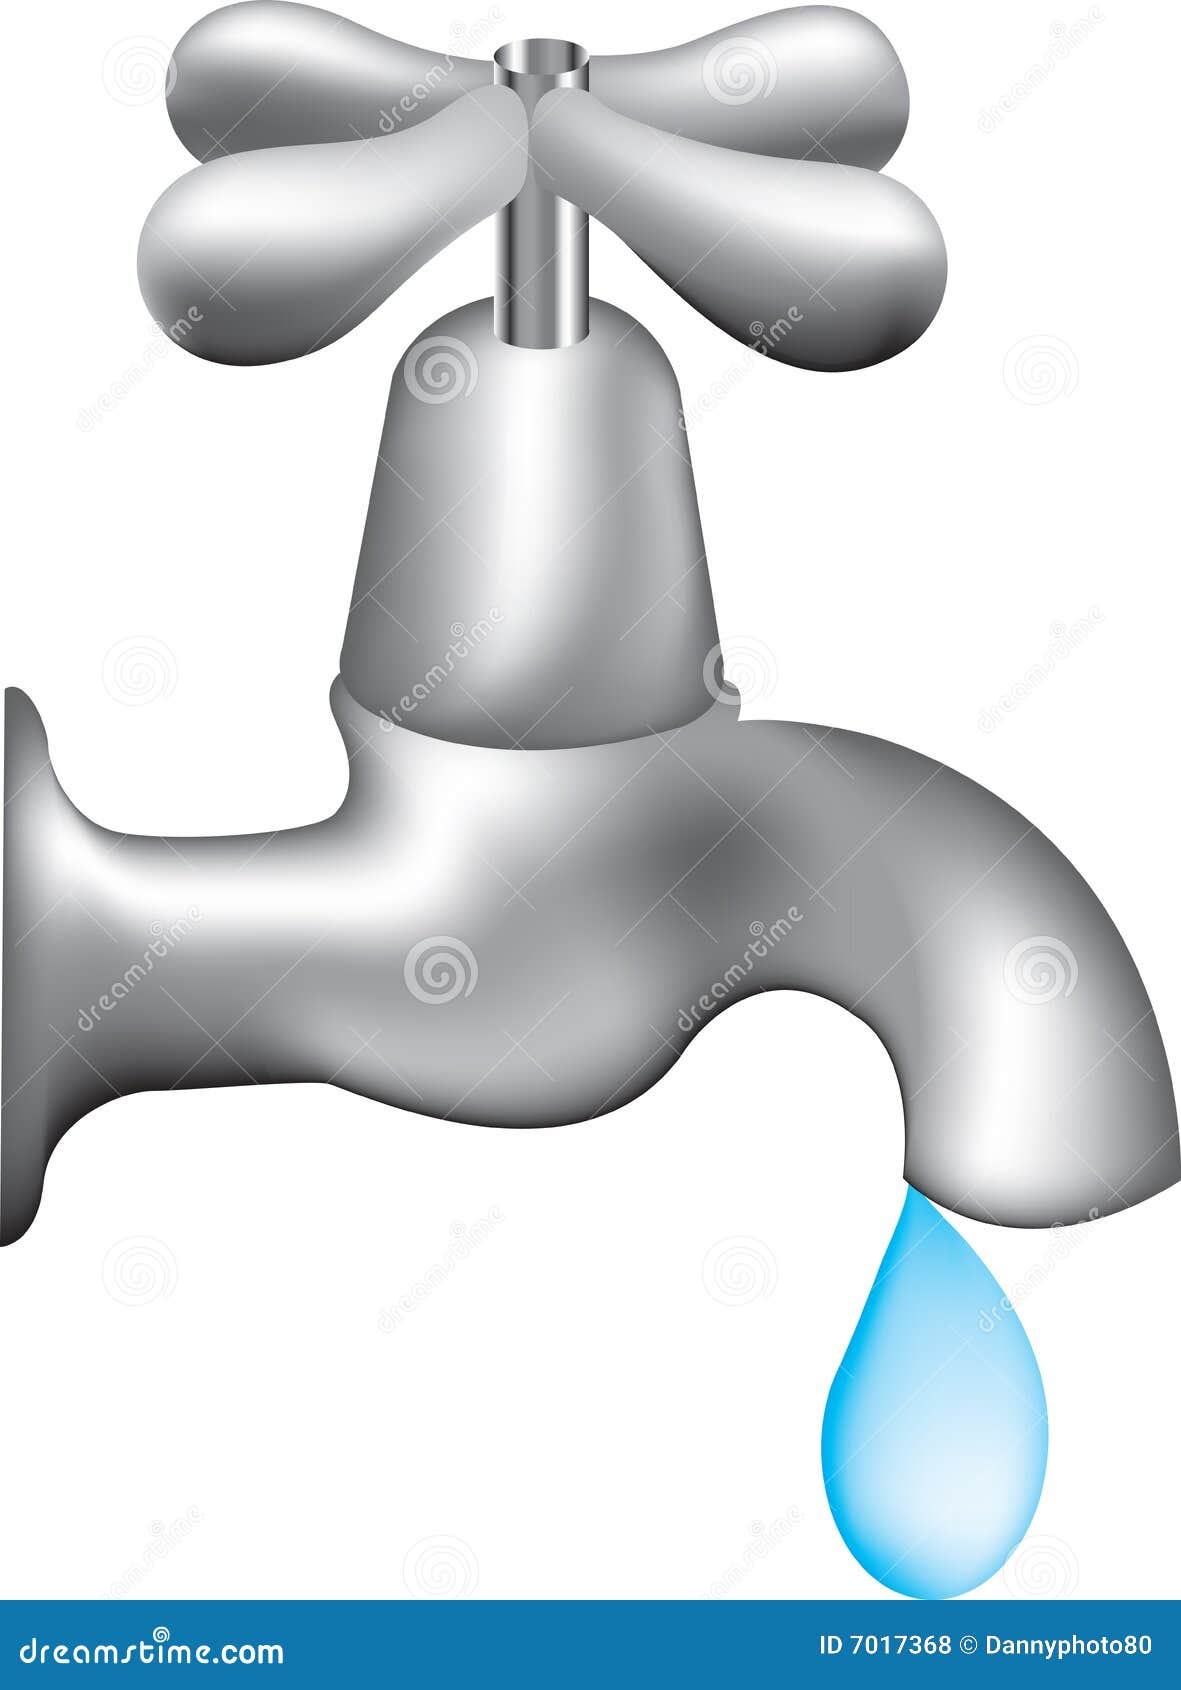 Dripping tap stock illustration. Illustration of water - 7017368